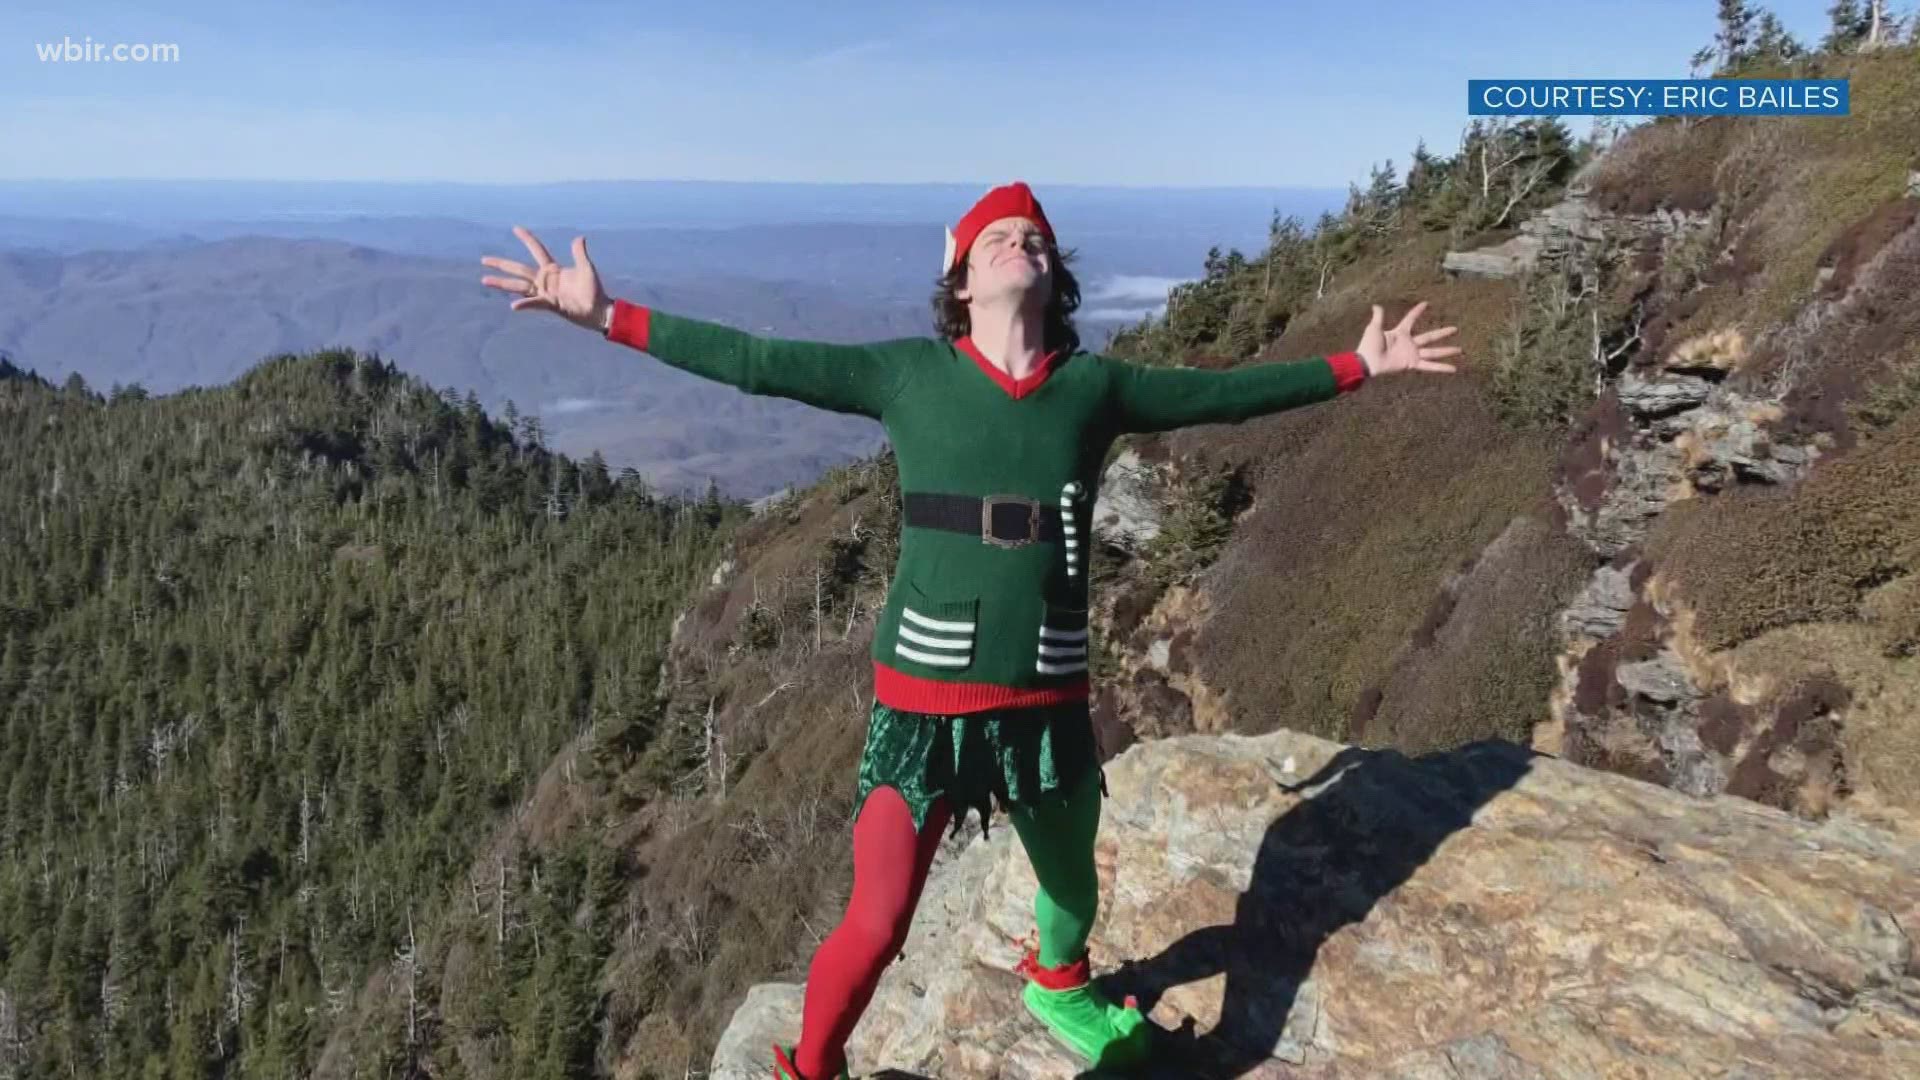 Rain, sleet, or snow, an East Tennessee man hikes the Smokies every Christmas Eve dressed as an elf.